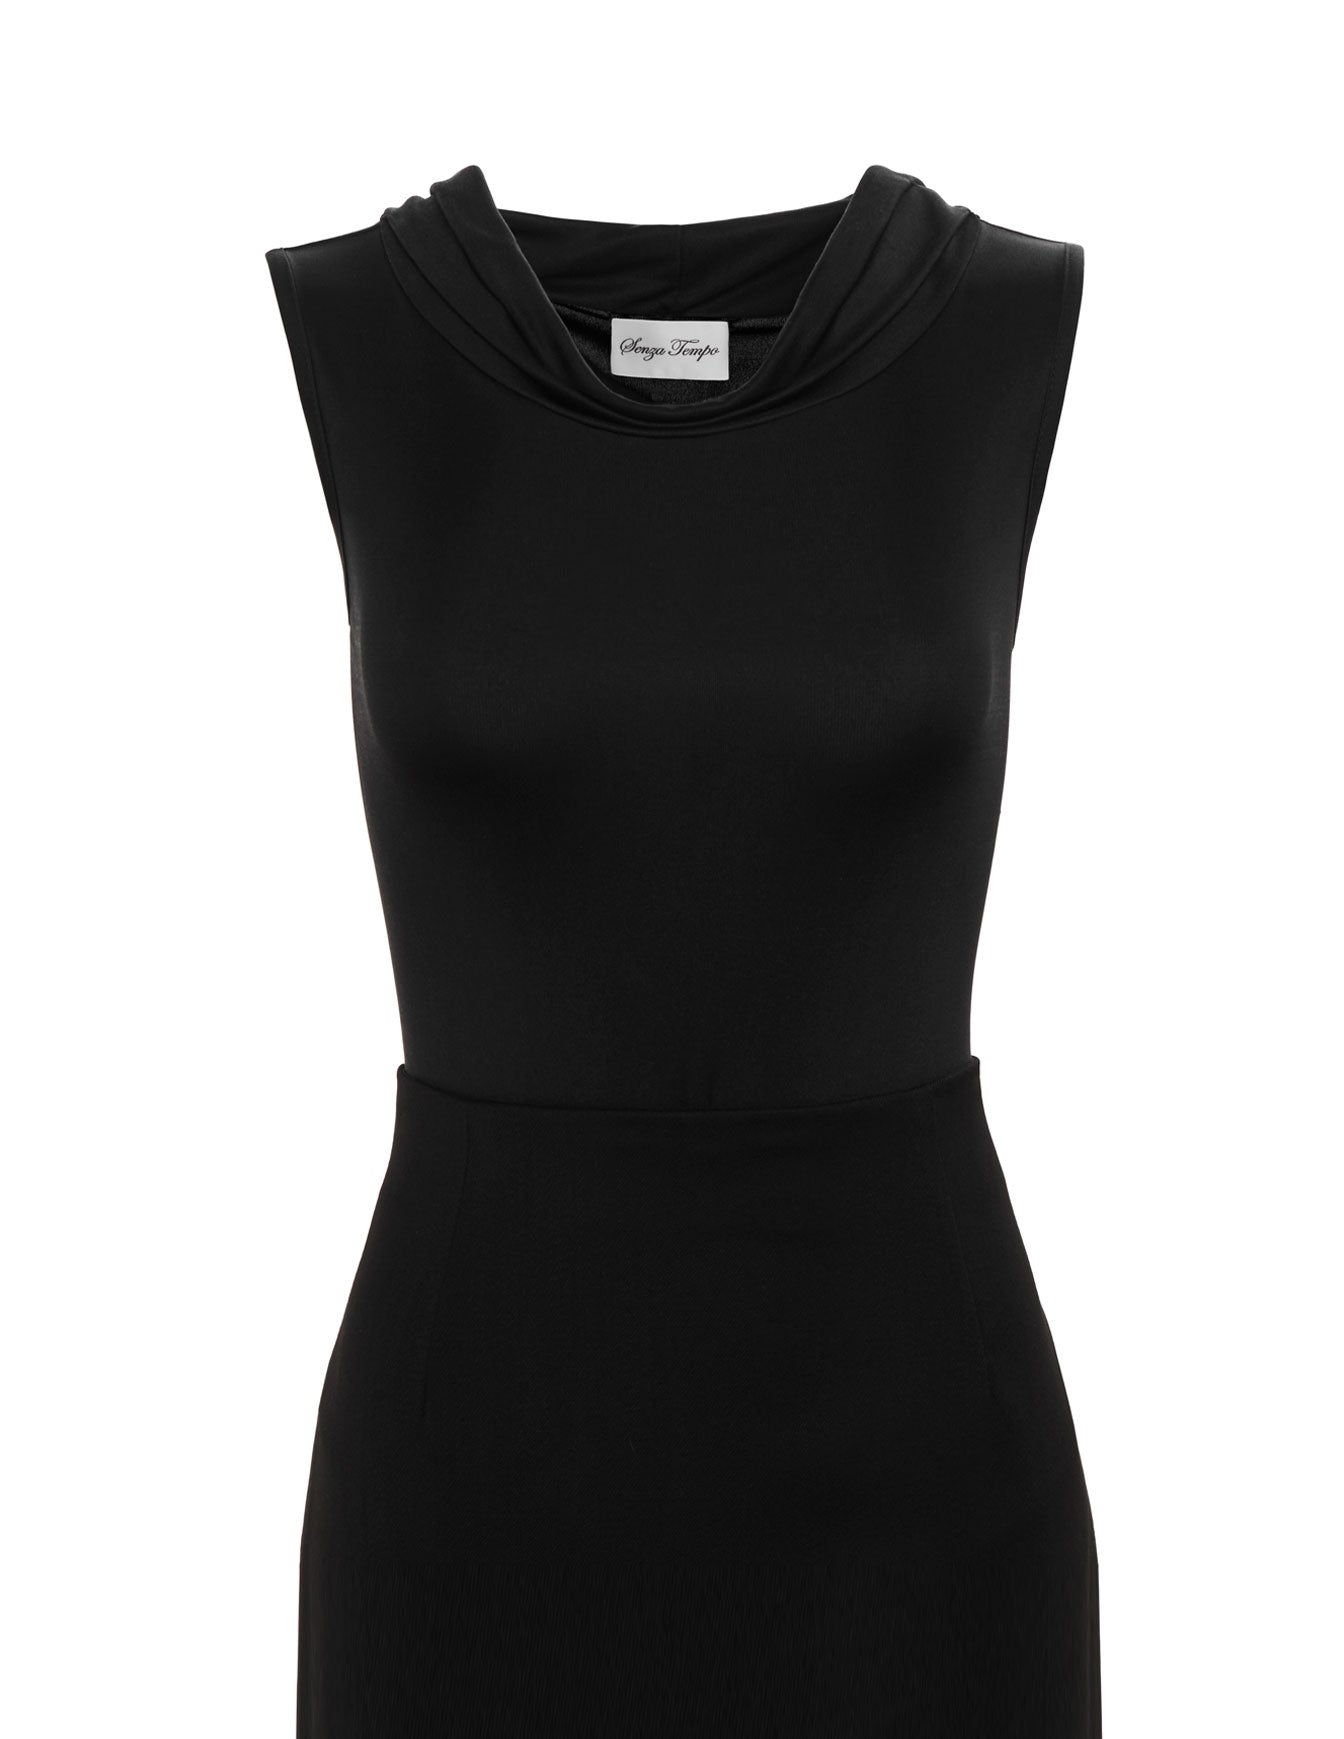 Luxe Finish Sleeveless Silk Tee Shirt — The Audrey IV - Senza Tempo Fashion